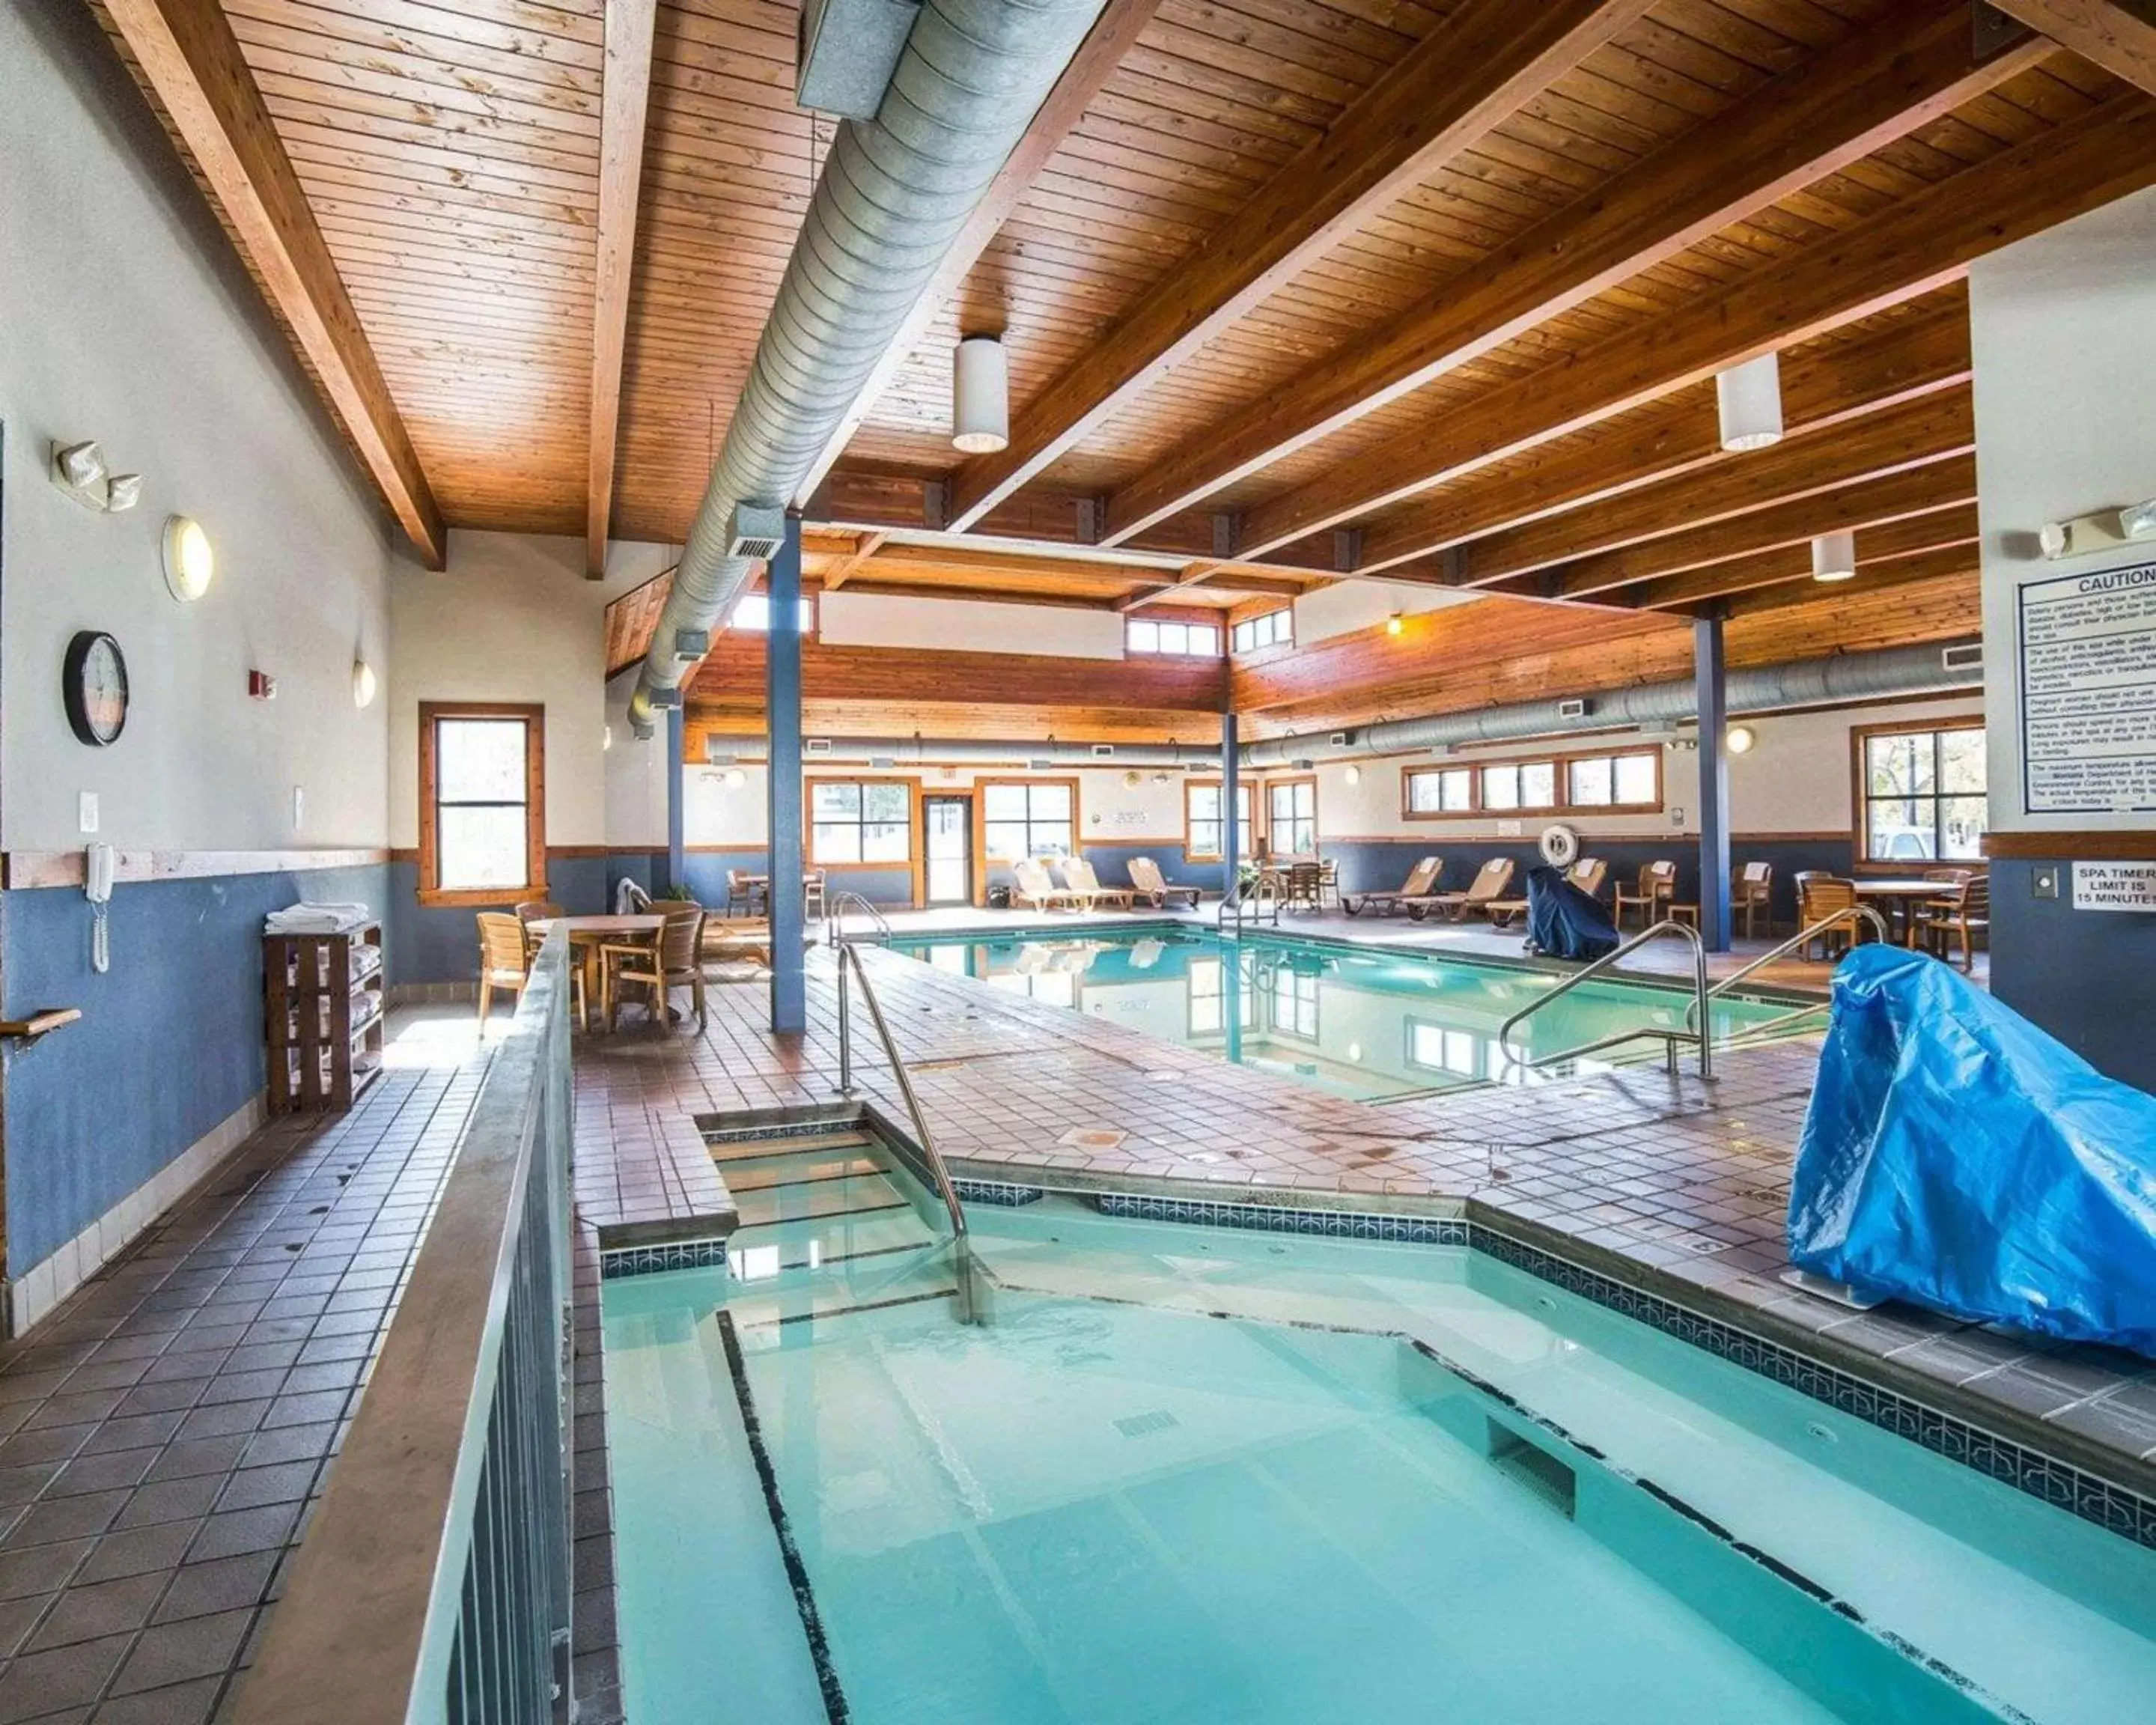 On site, Swimming Pool in Quality Inn Homestead Park Billings